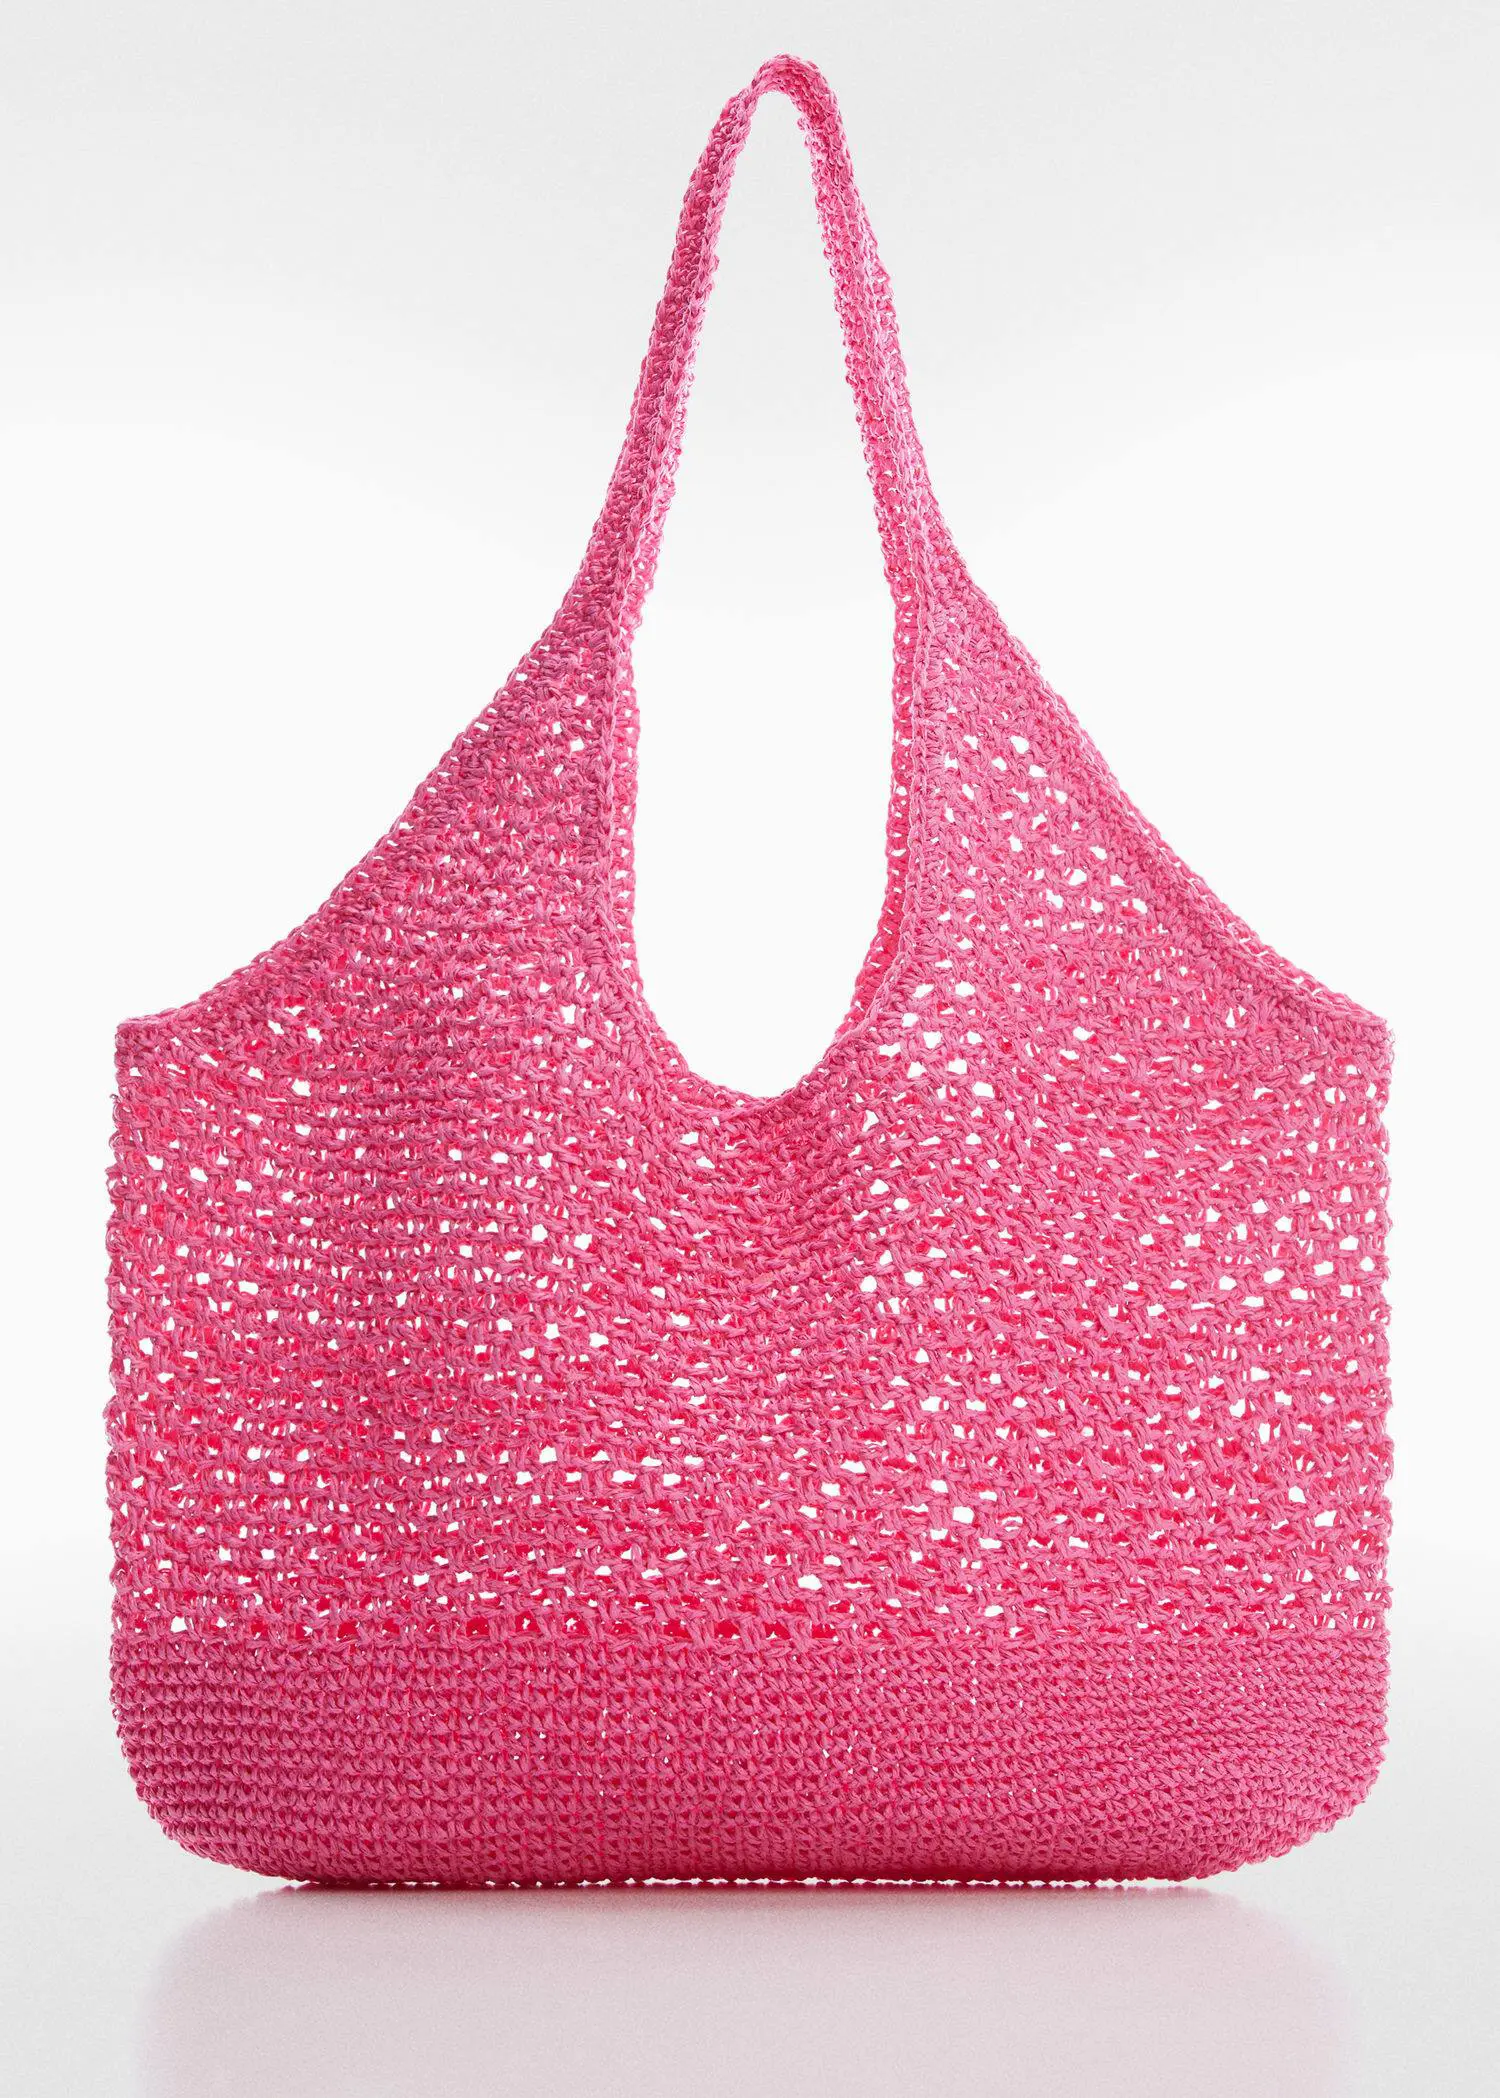 Mango Natural fiber sack bag. a close-up of a crocheted pink bag. 